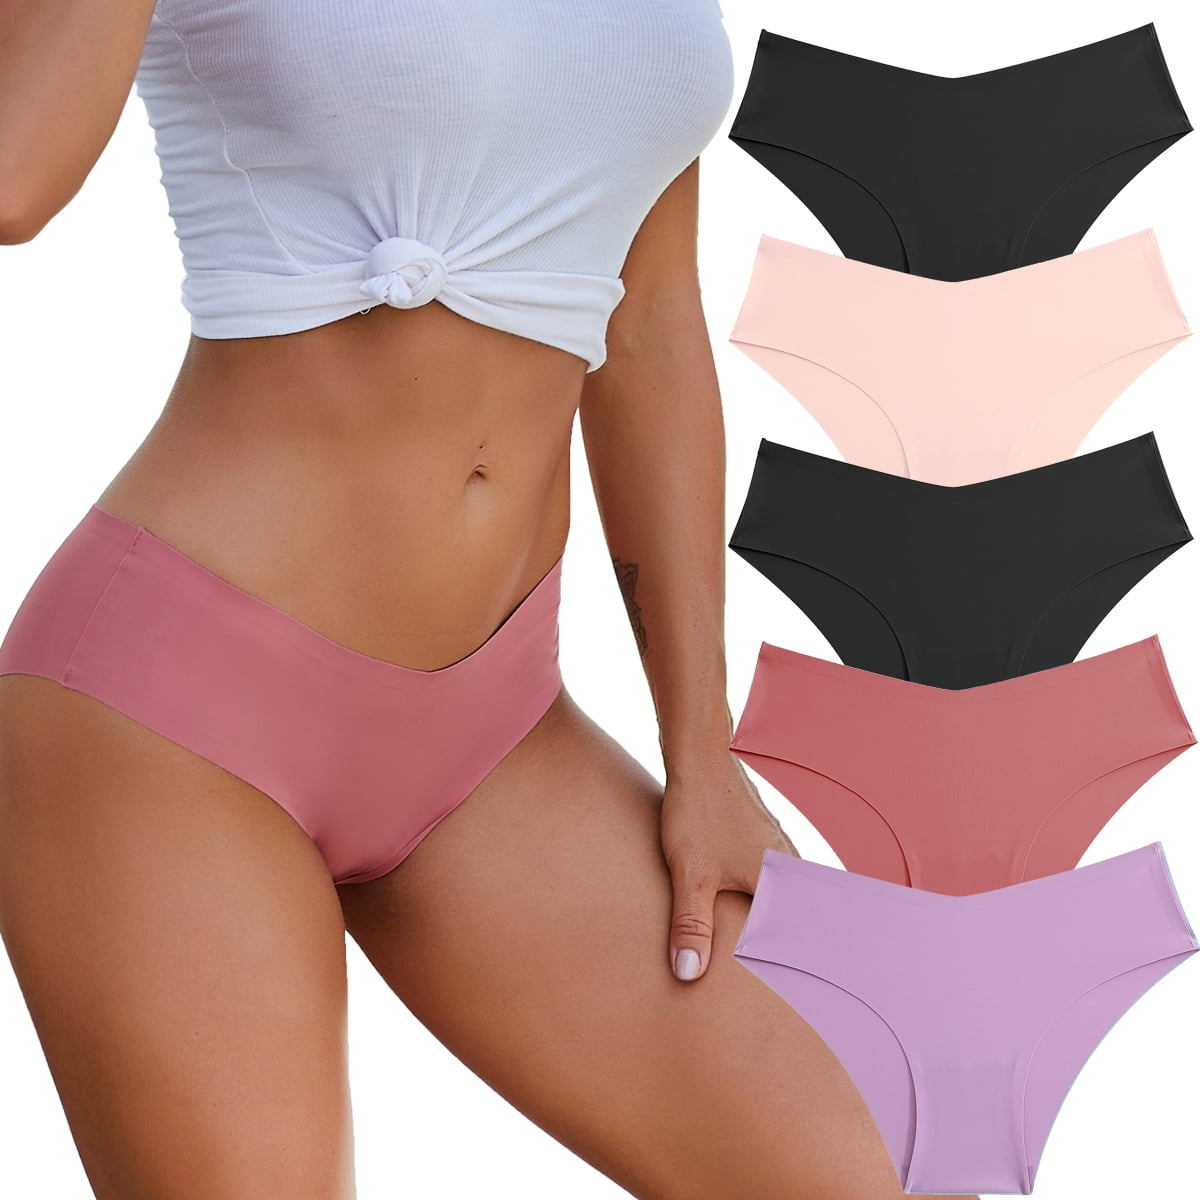 5 pairs of Victoria's Secret seamless hiphugger panties